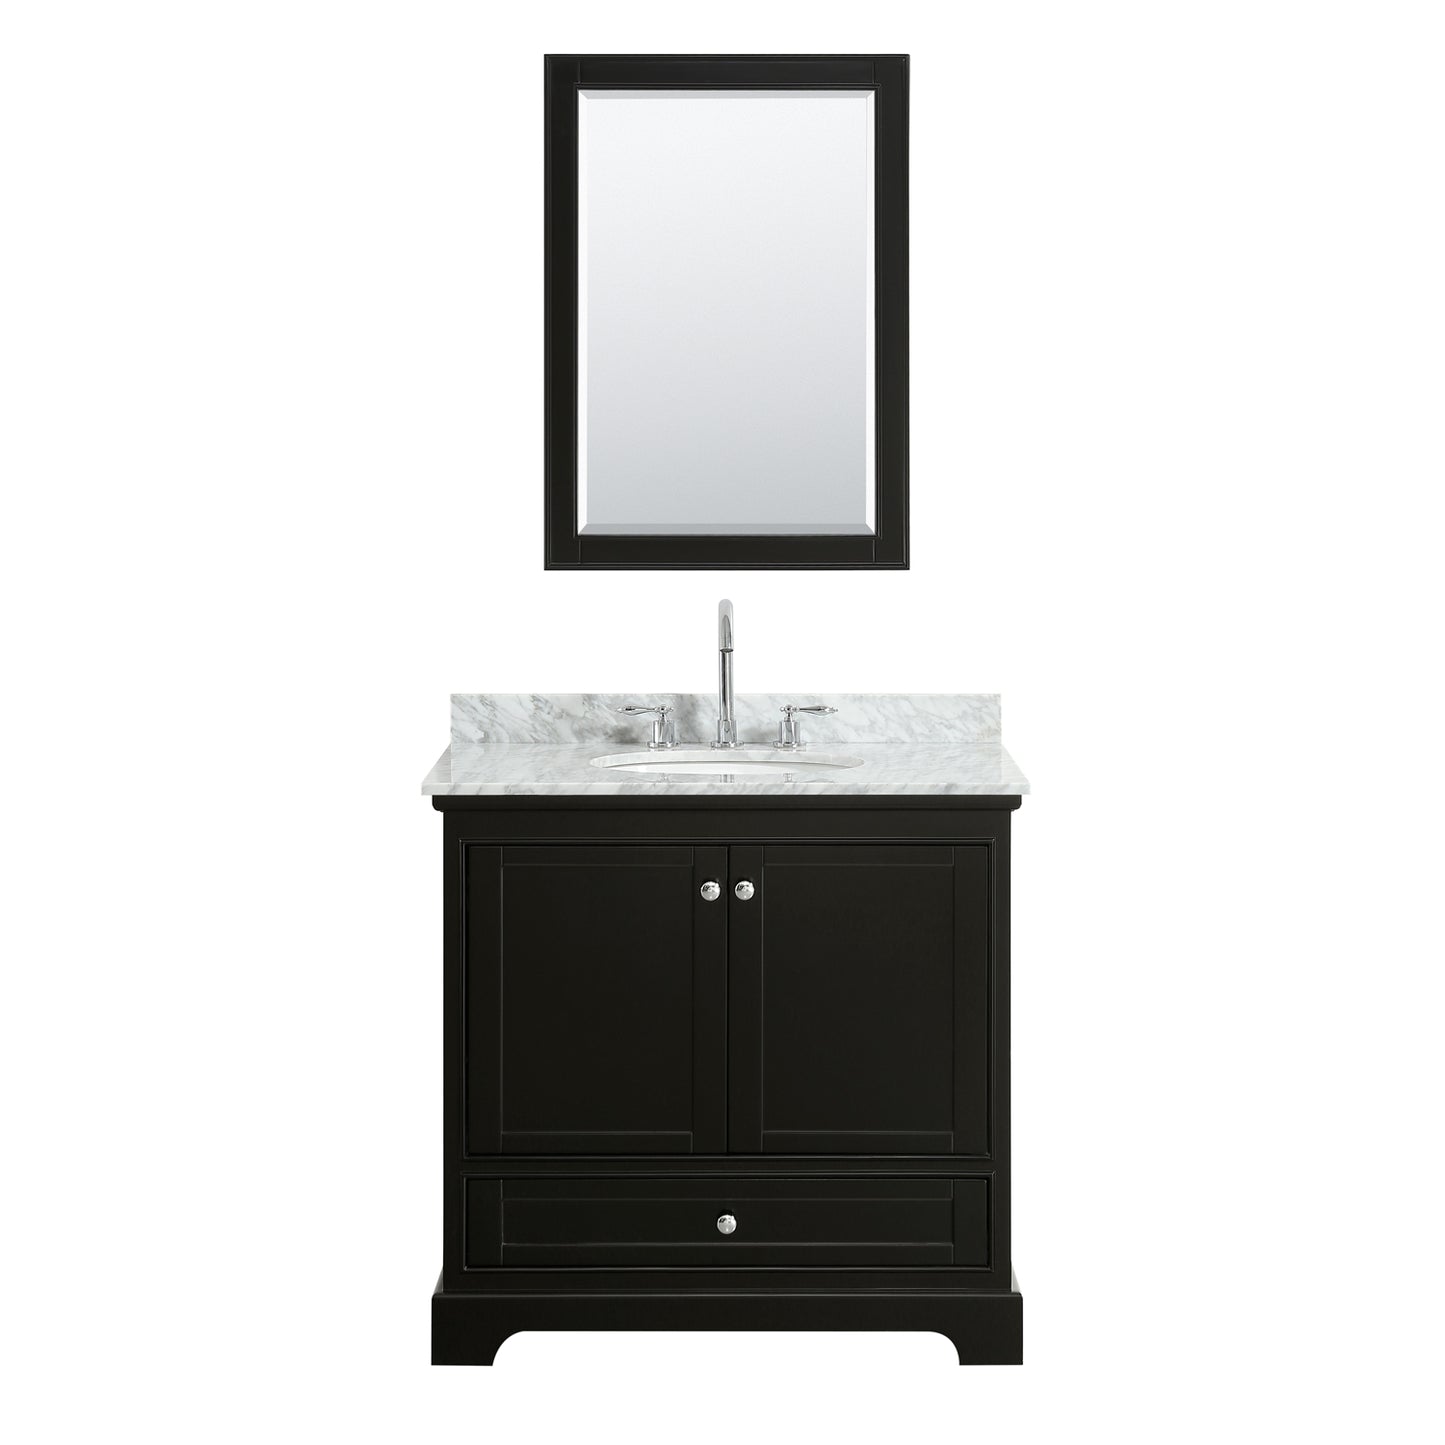 36 Inch Single Bathroom Vanity, White Carrara Marble Countertop, Undermount Oval Sink, and 24 Inch Mirror - Luxe Bathroom Vanities Luxury Bathroom Fixtures Bathroom Furniture